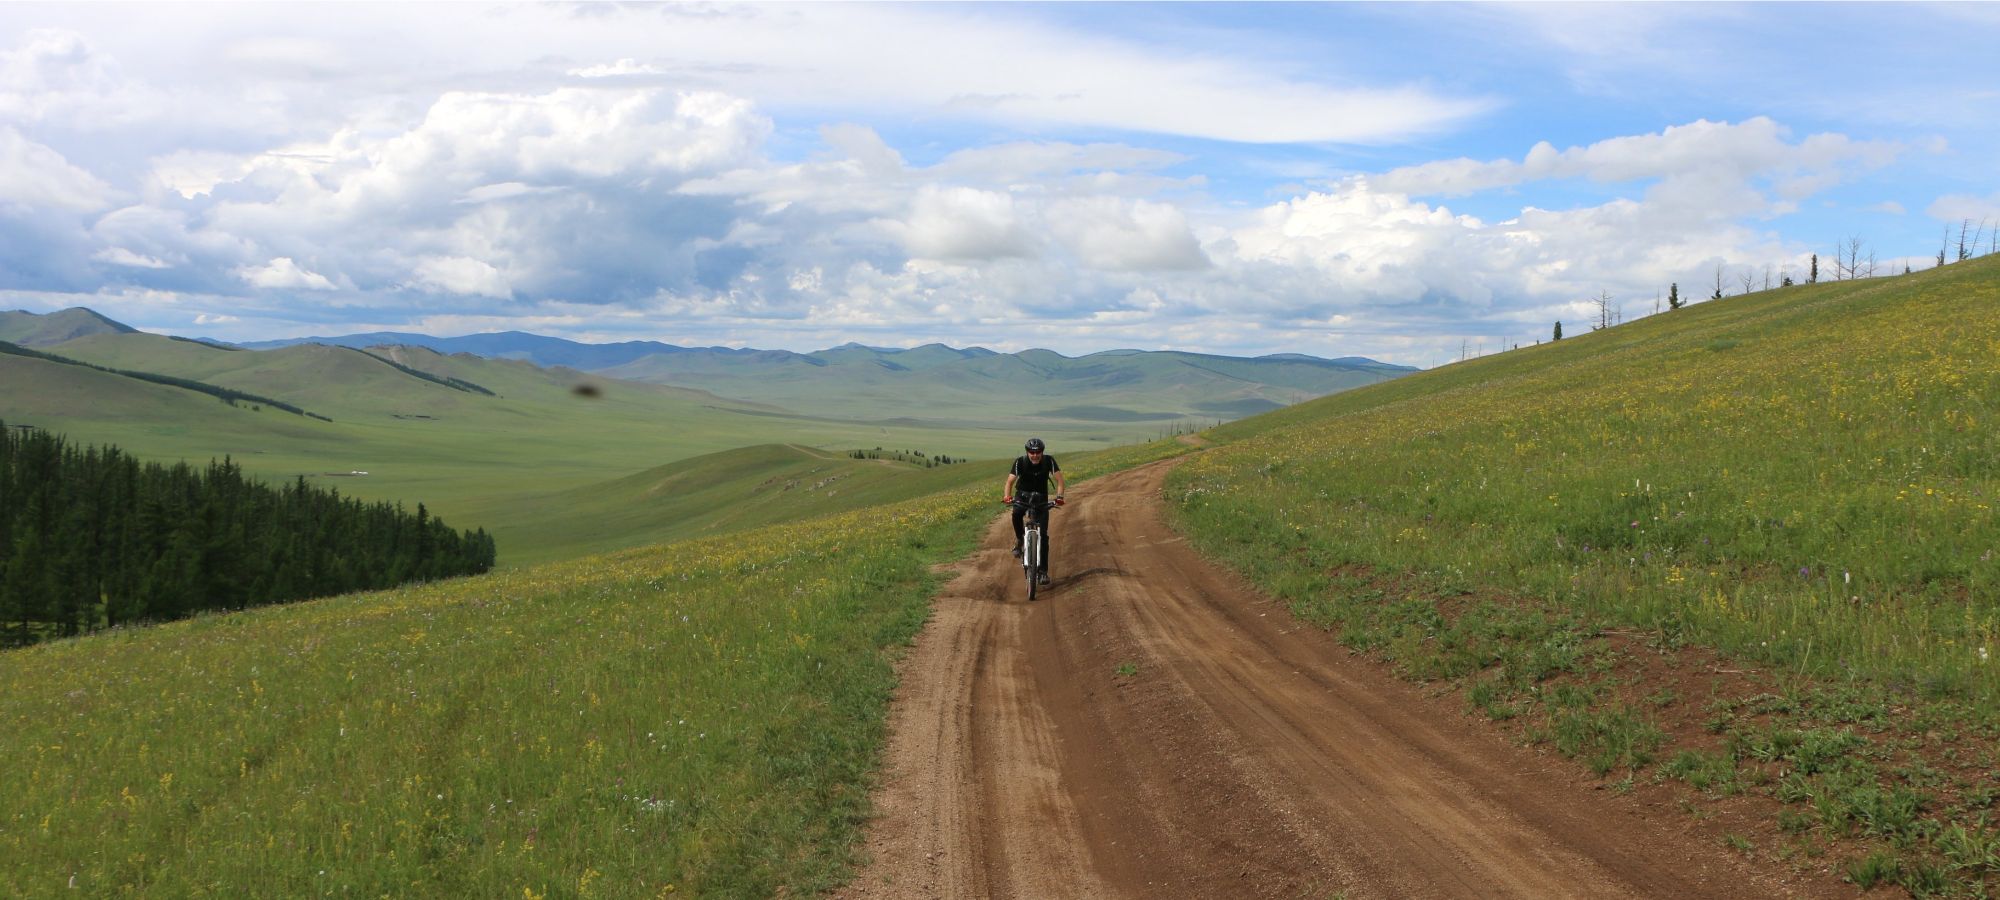 Cycling Tours Gobi Desert, Mongolia